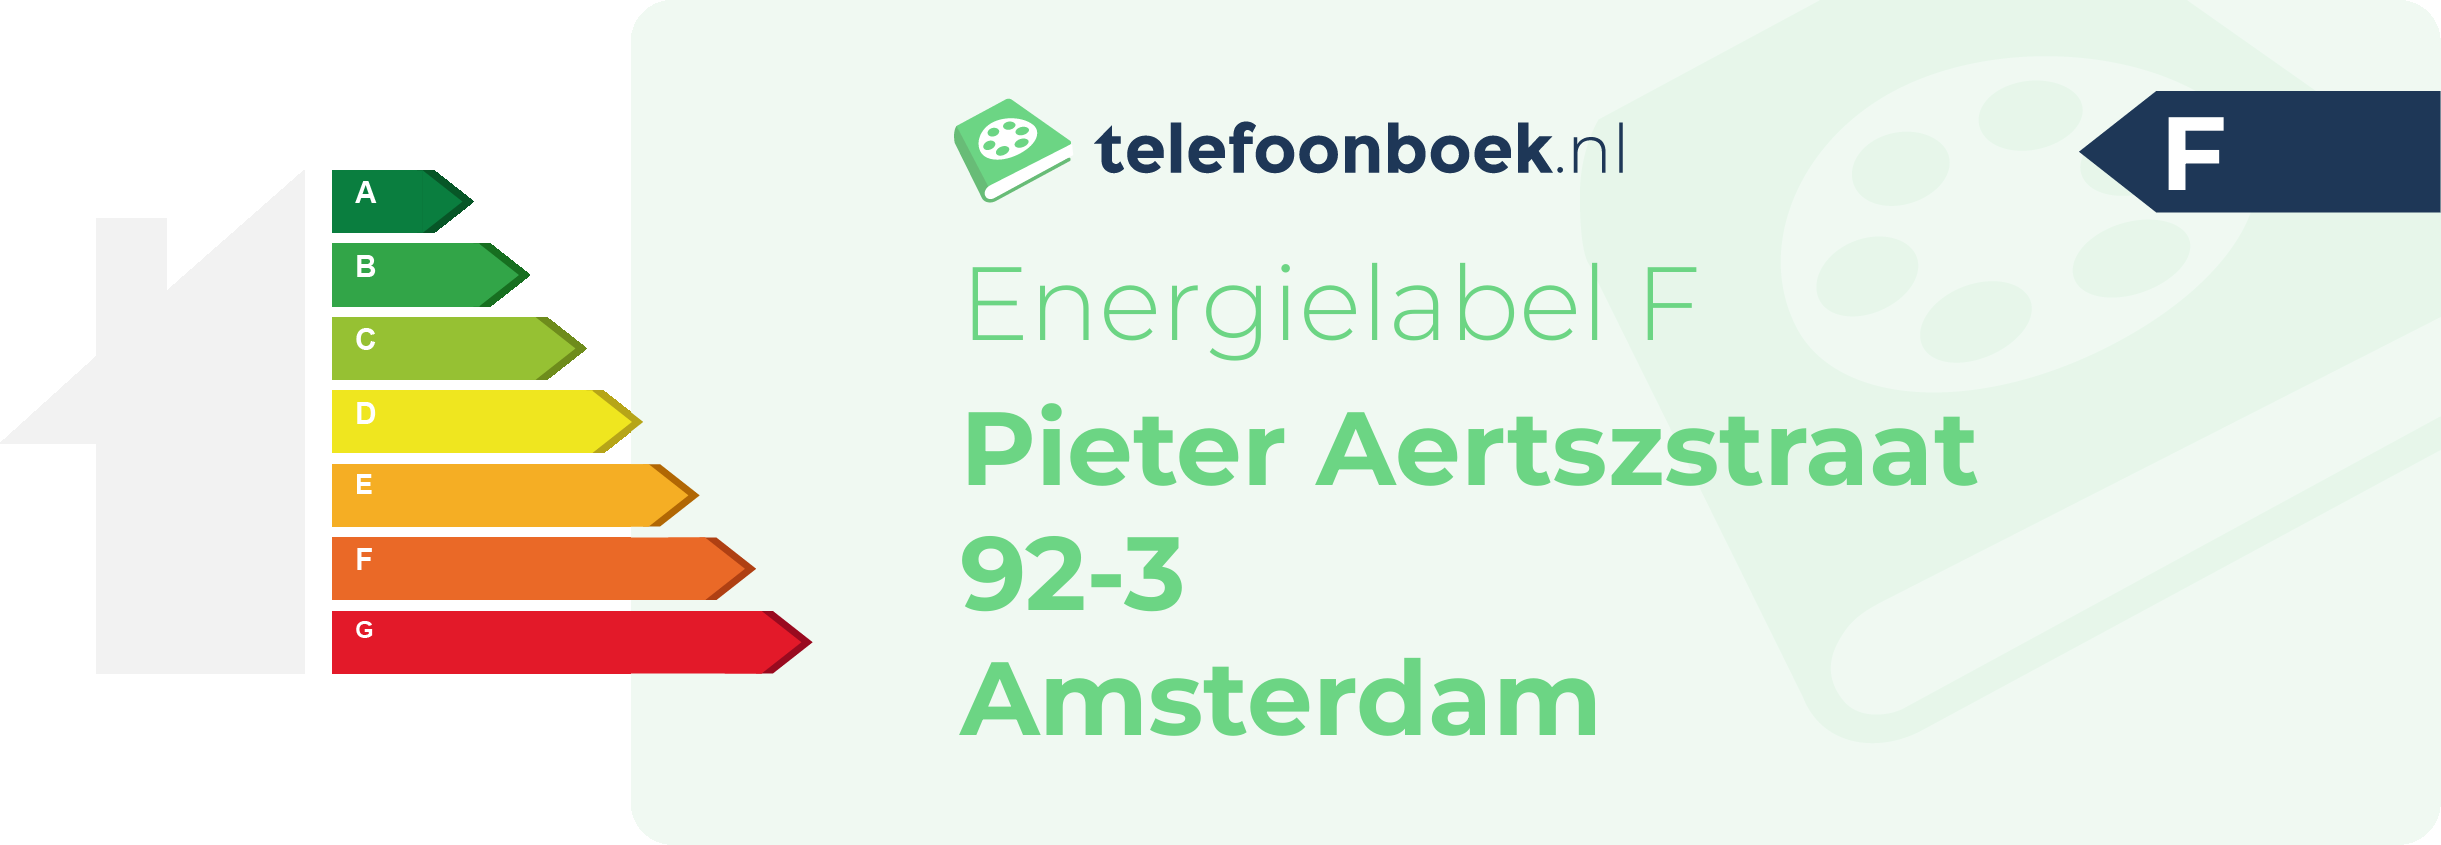 Energielabel Pieter Aertszstraat 92-3 Amsterdam